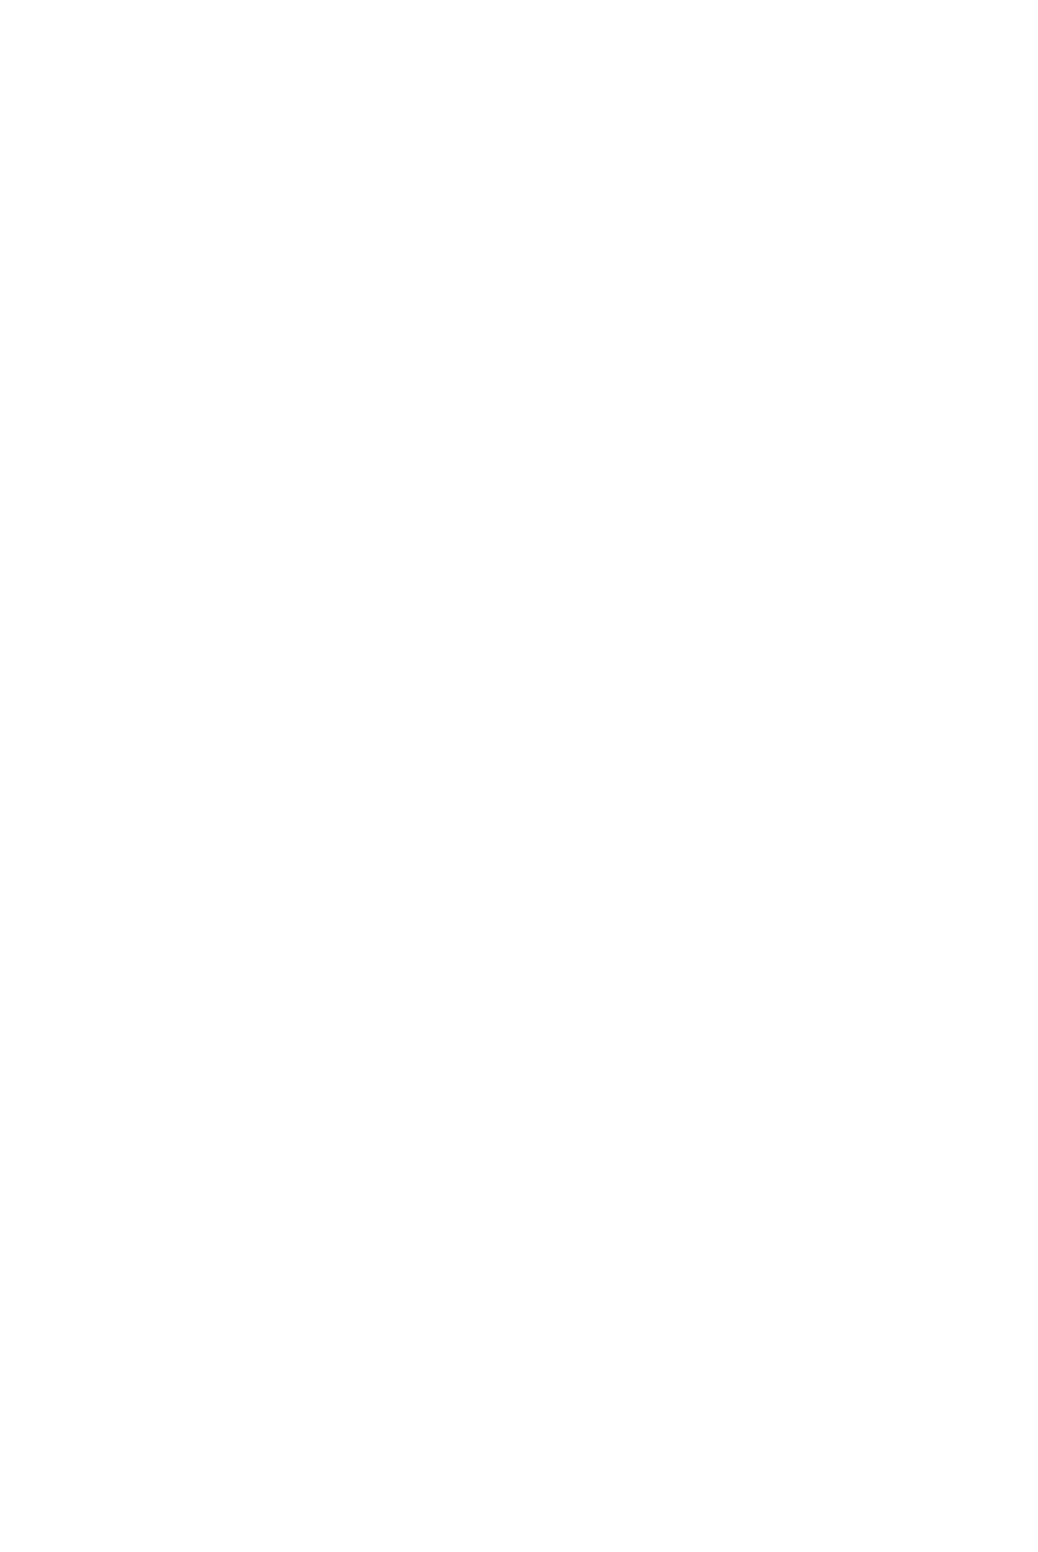 DIRTT Environmental Solutions logo for dark backgrounds (transparent PNG)